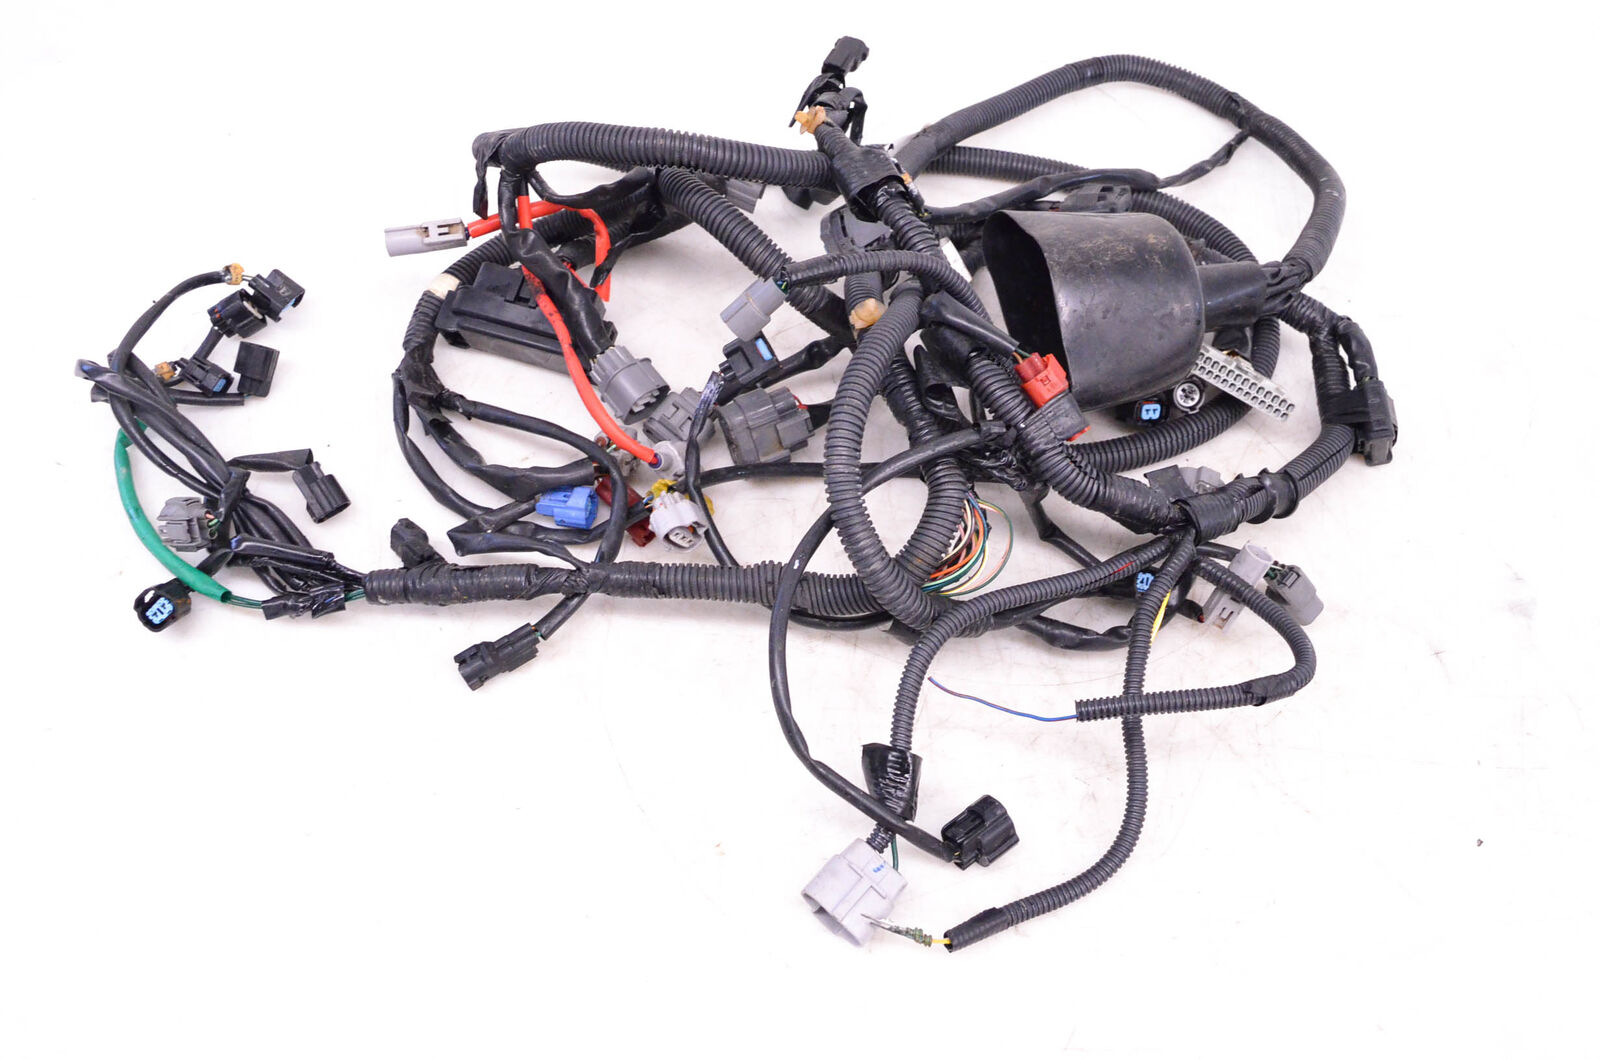 06 Honda Aquatrax F-12x Wire Harness Electrical Wiring Arx1200